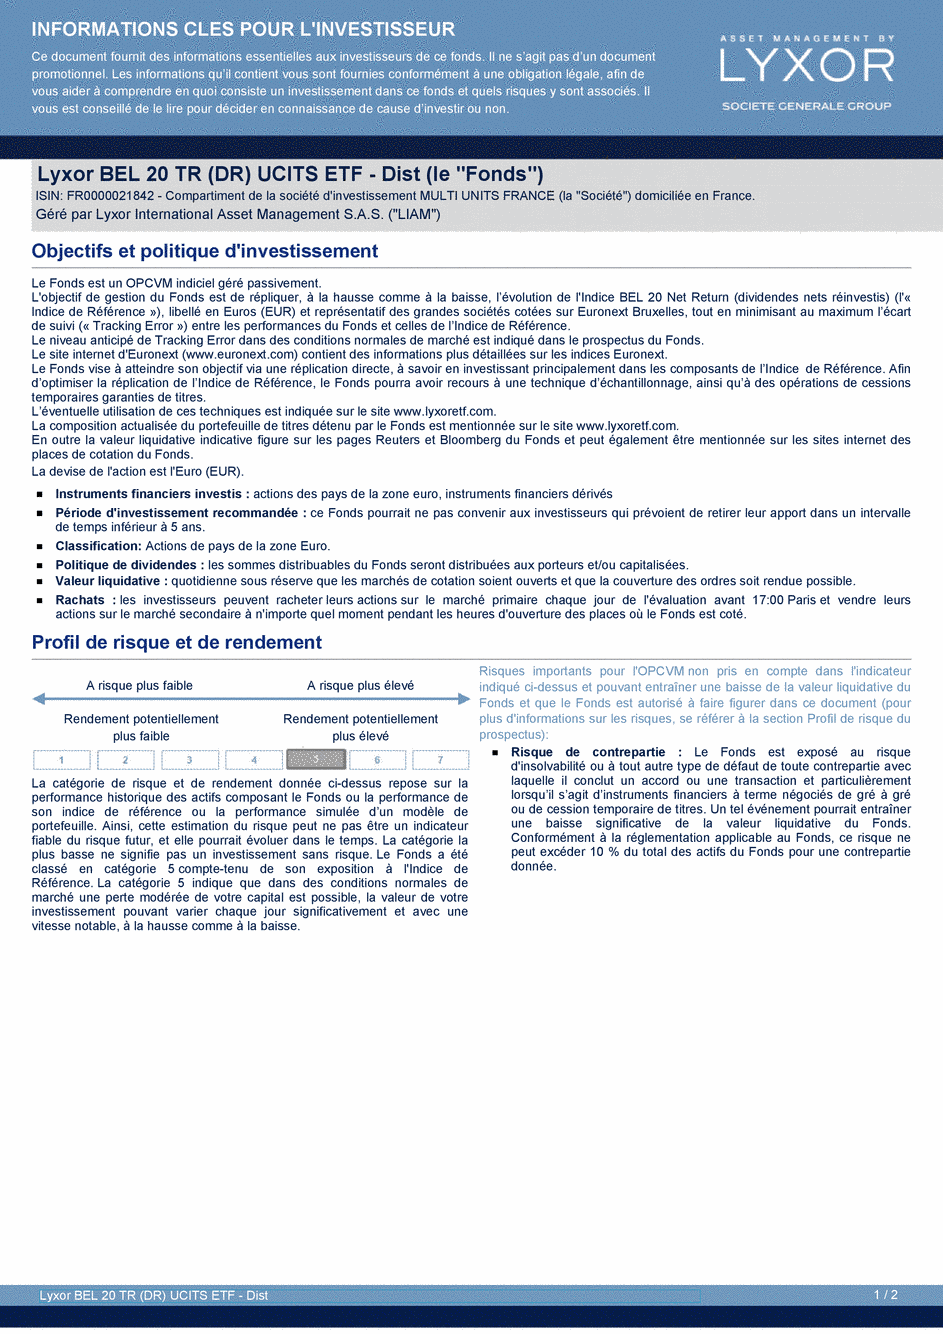 DICI Lyxor BEL 20 TR (DR) UCITS ETF - Dist - 19/02/2020 - Français